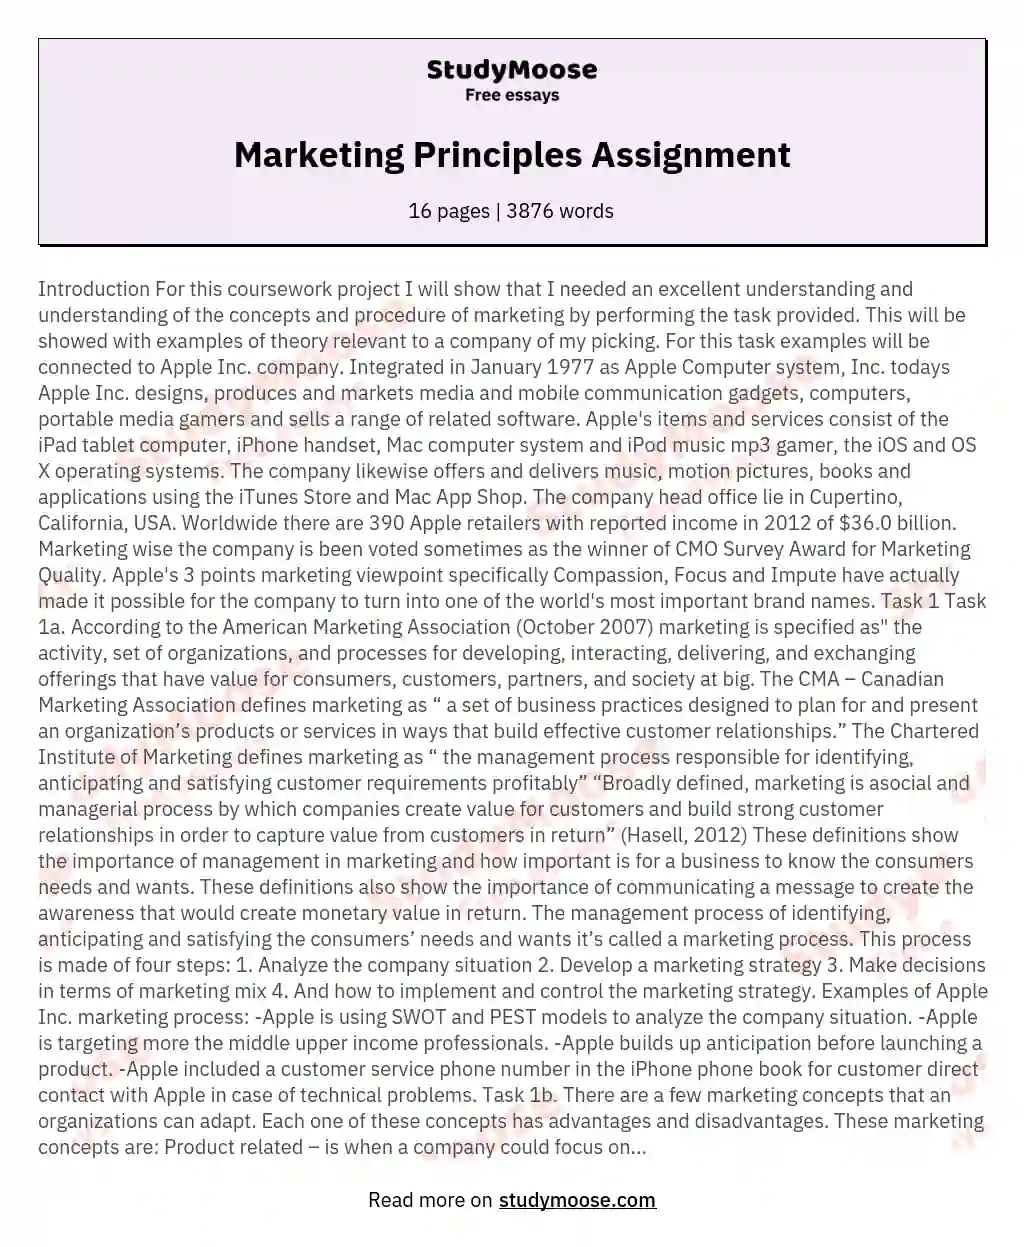 Marketing Principles Assignment essay